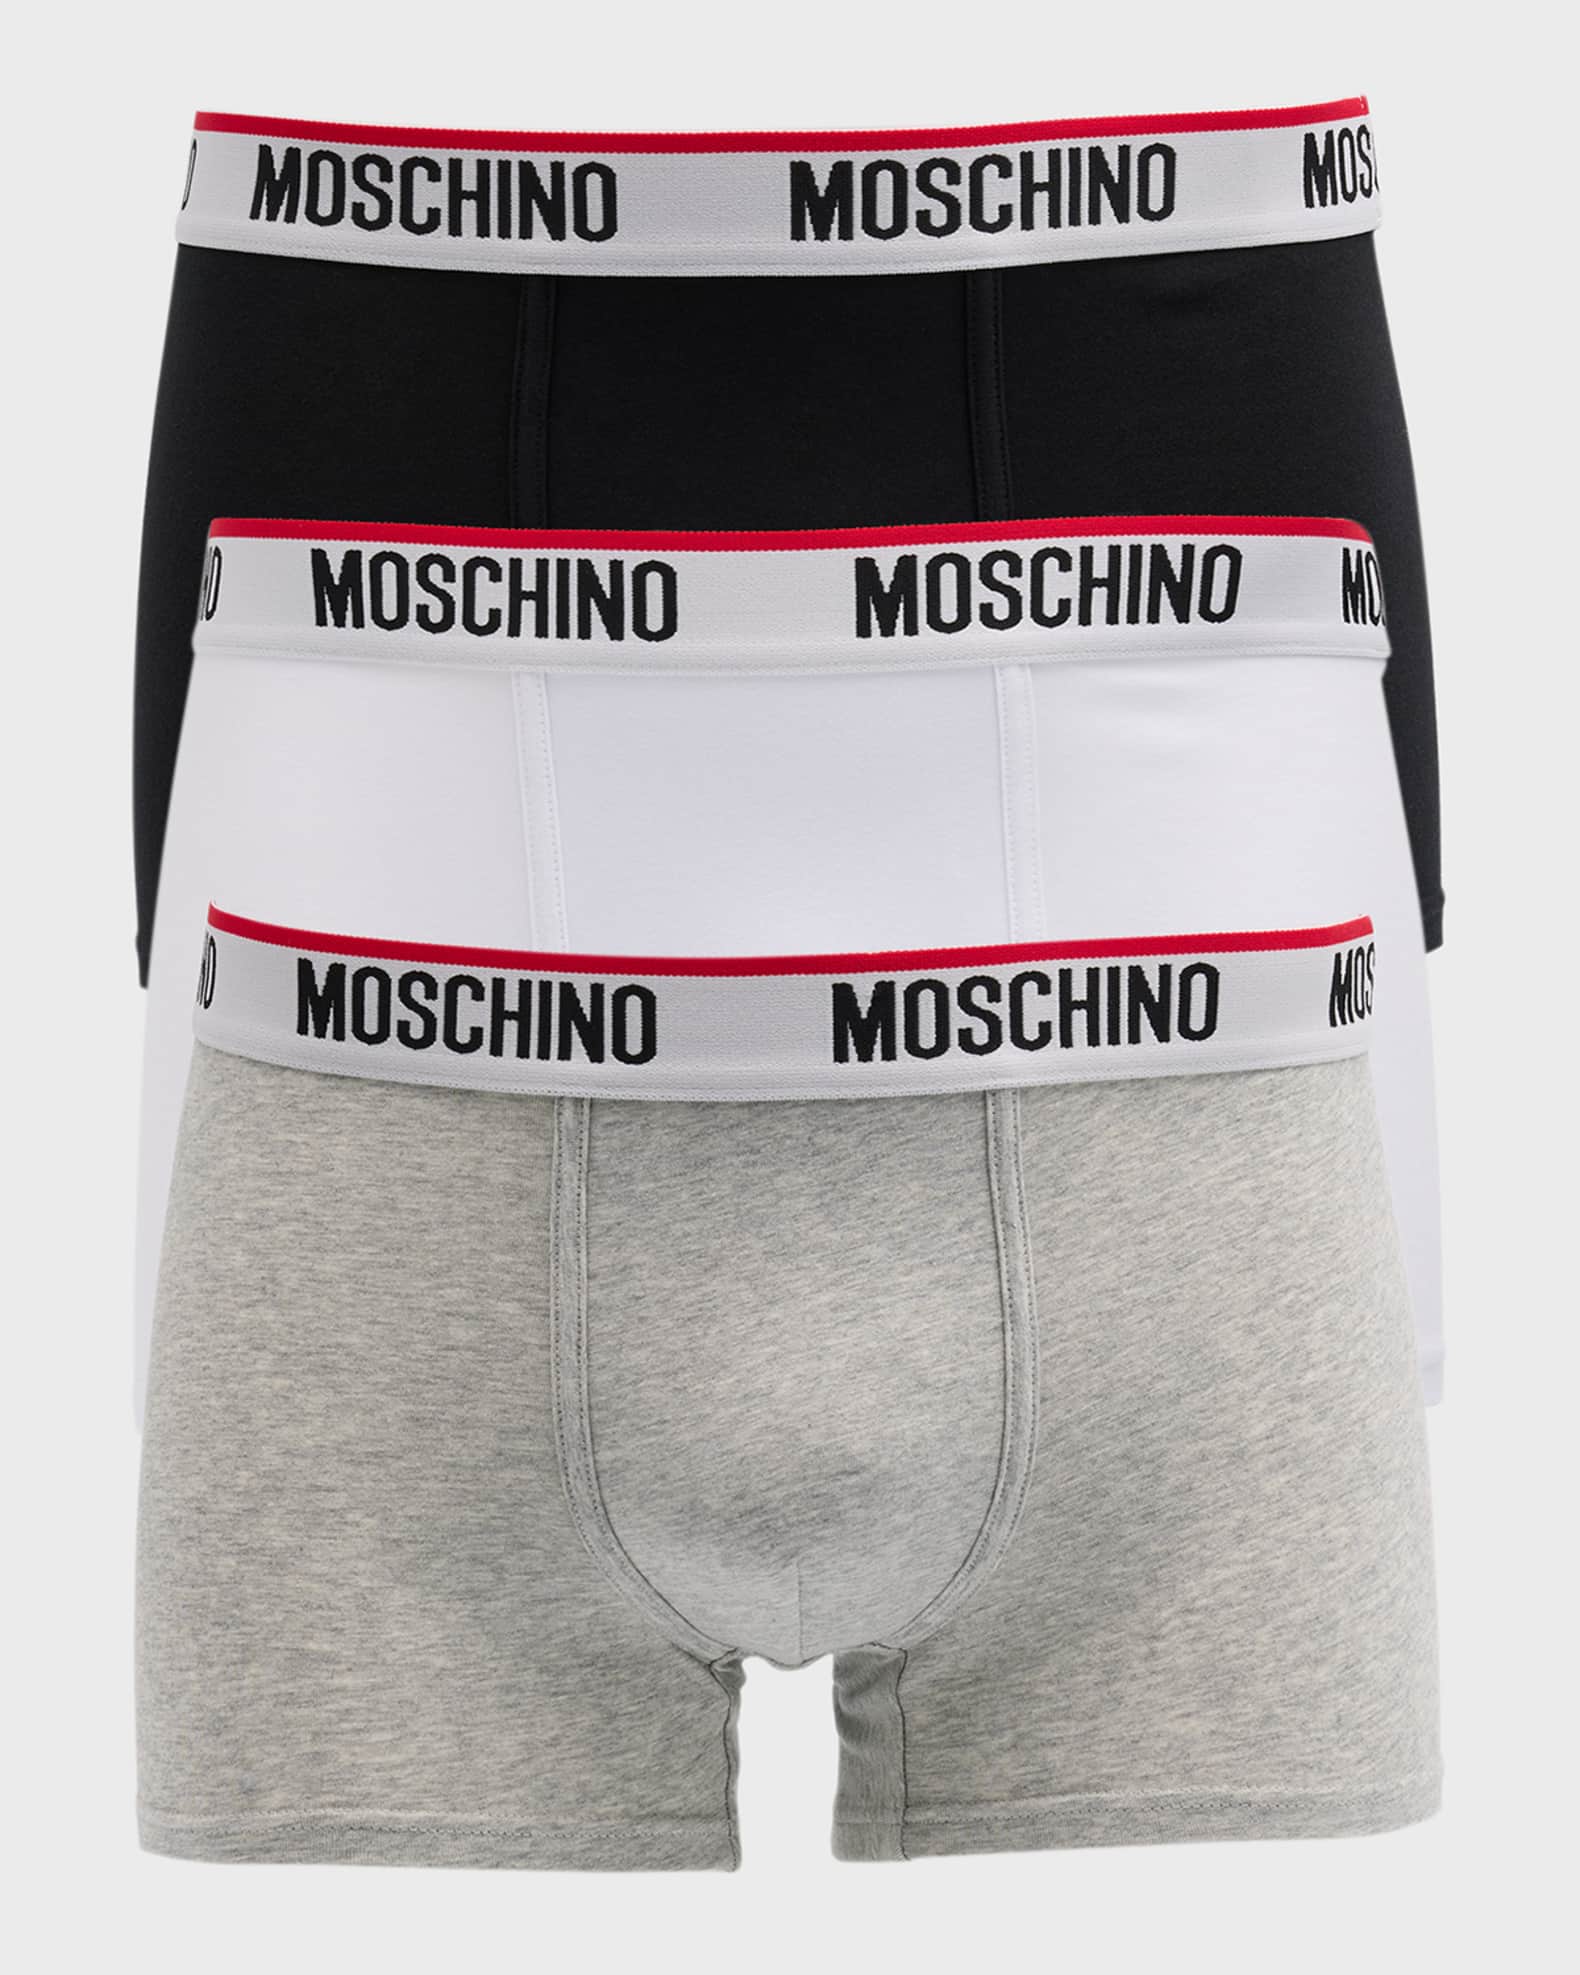 Moschino Men's 3-Pack Classic Logo Trunks